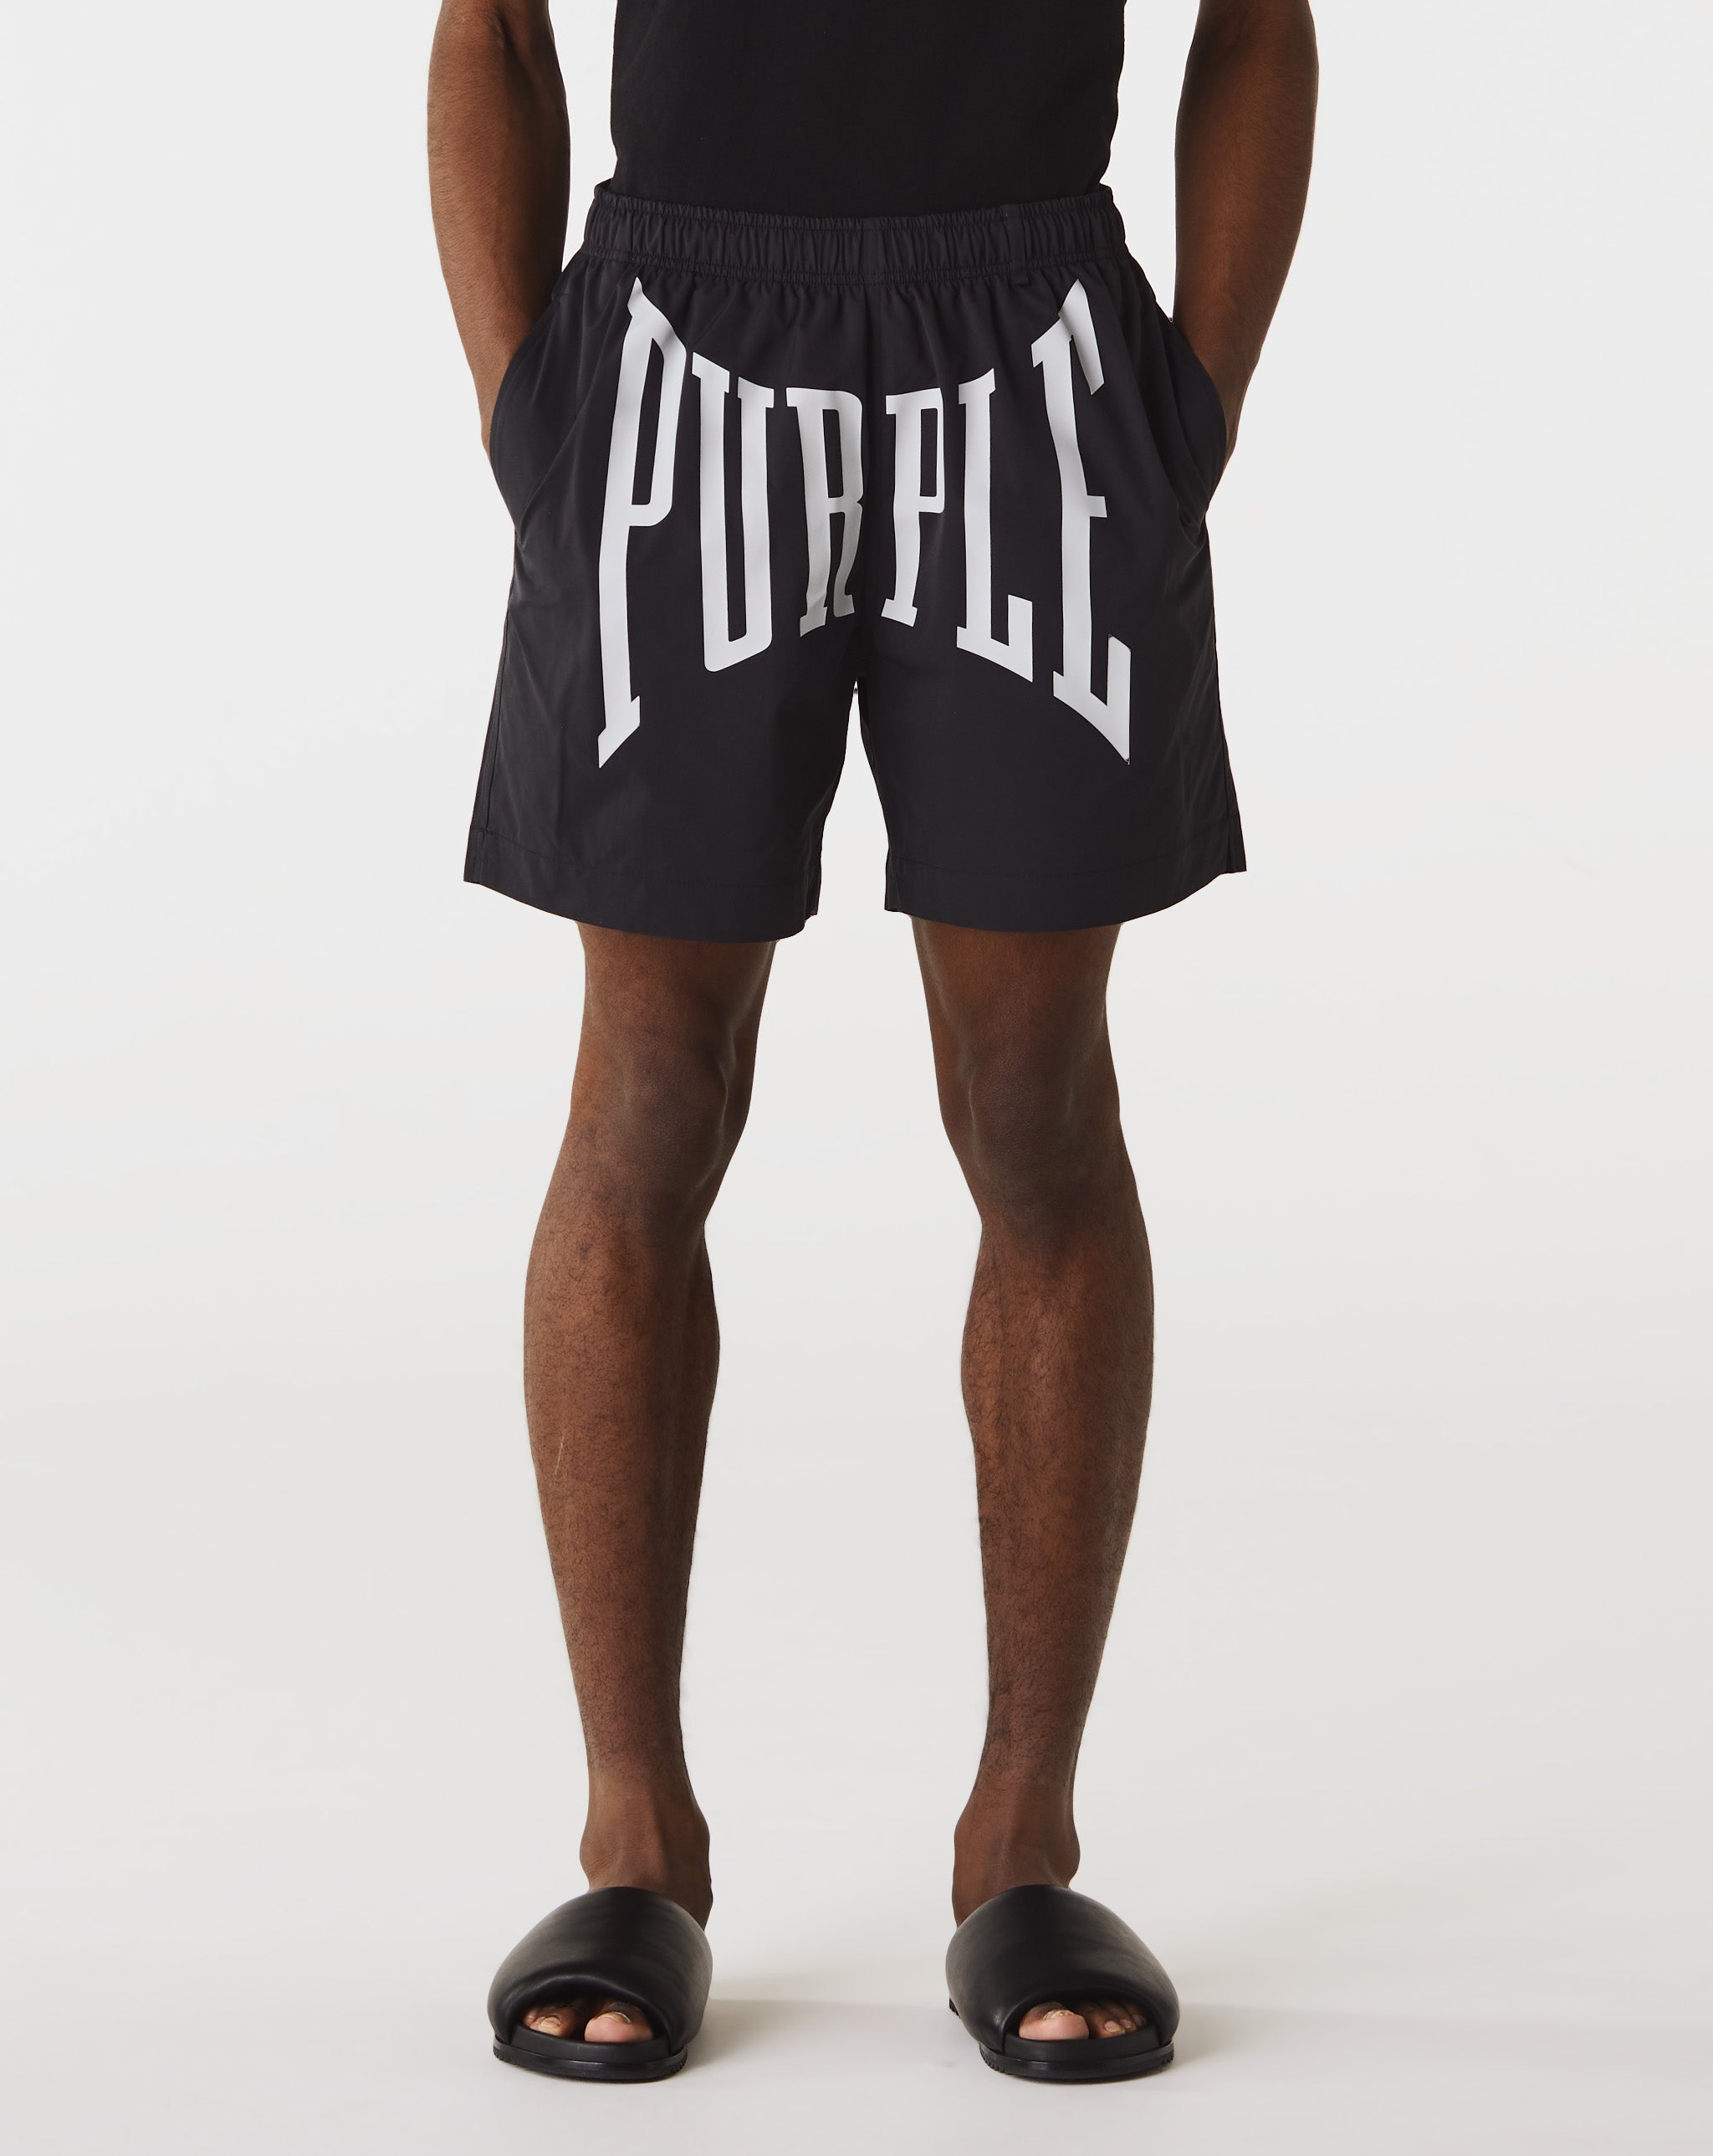 Purple Brand Guide des tailles Pepe Jeans  - Cheap Erlebniswelt-fliegenfischen Jordan outlet